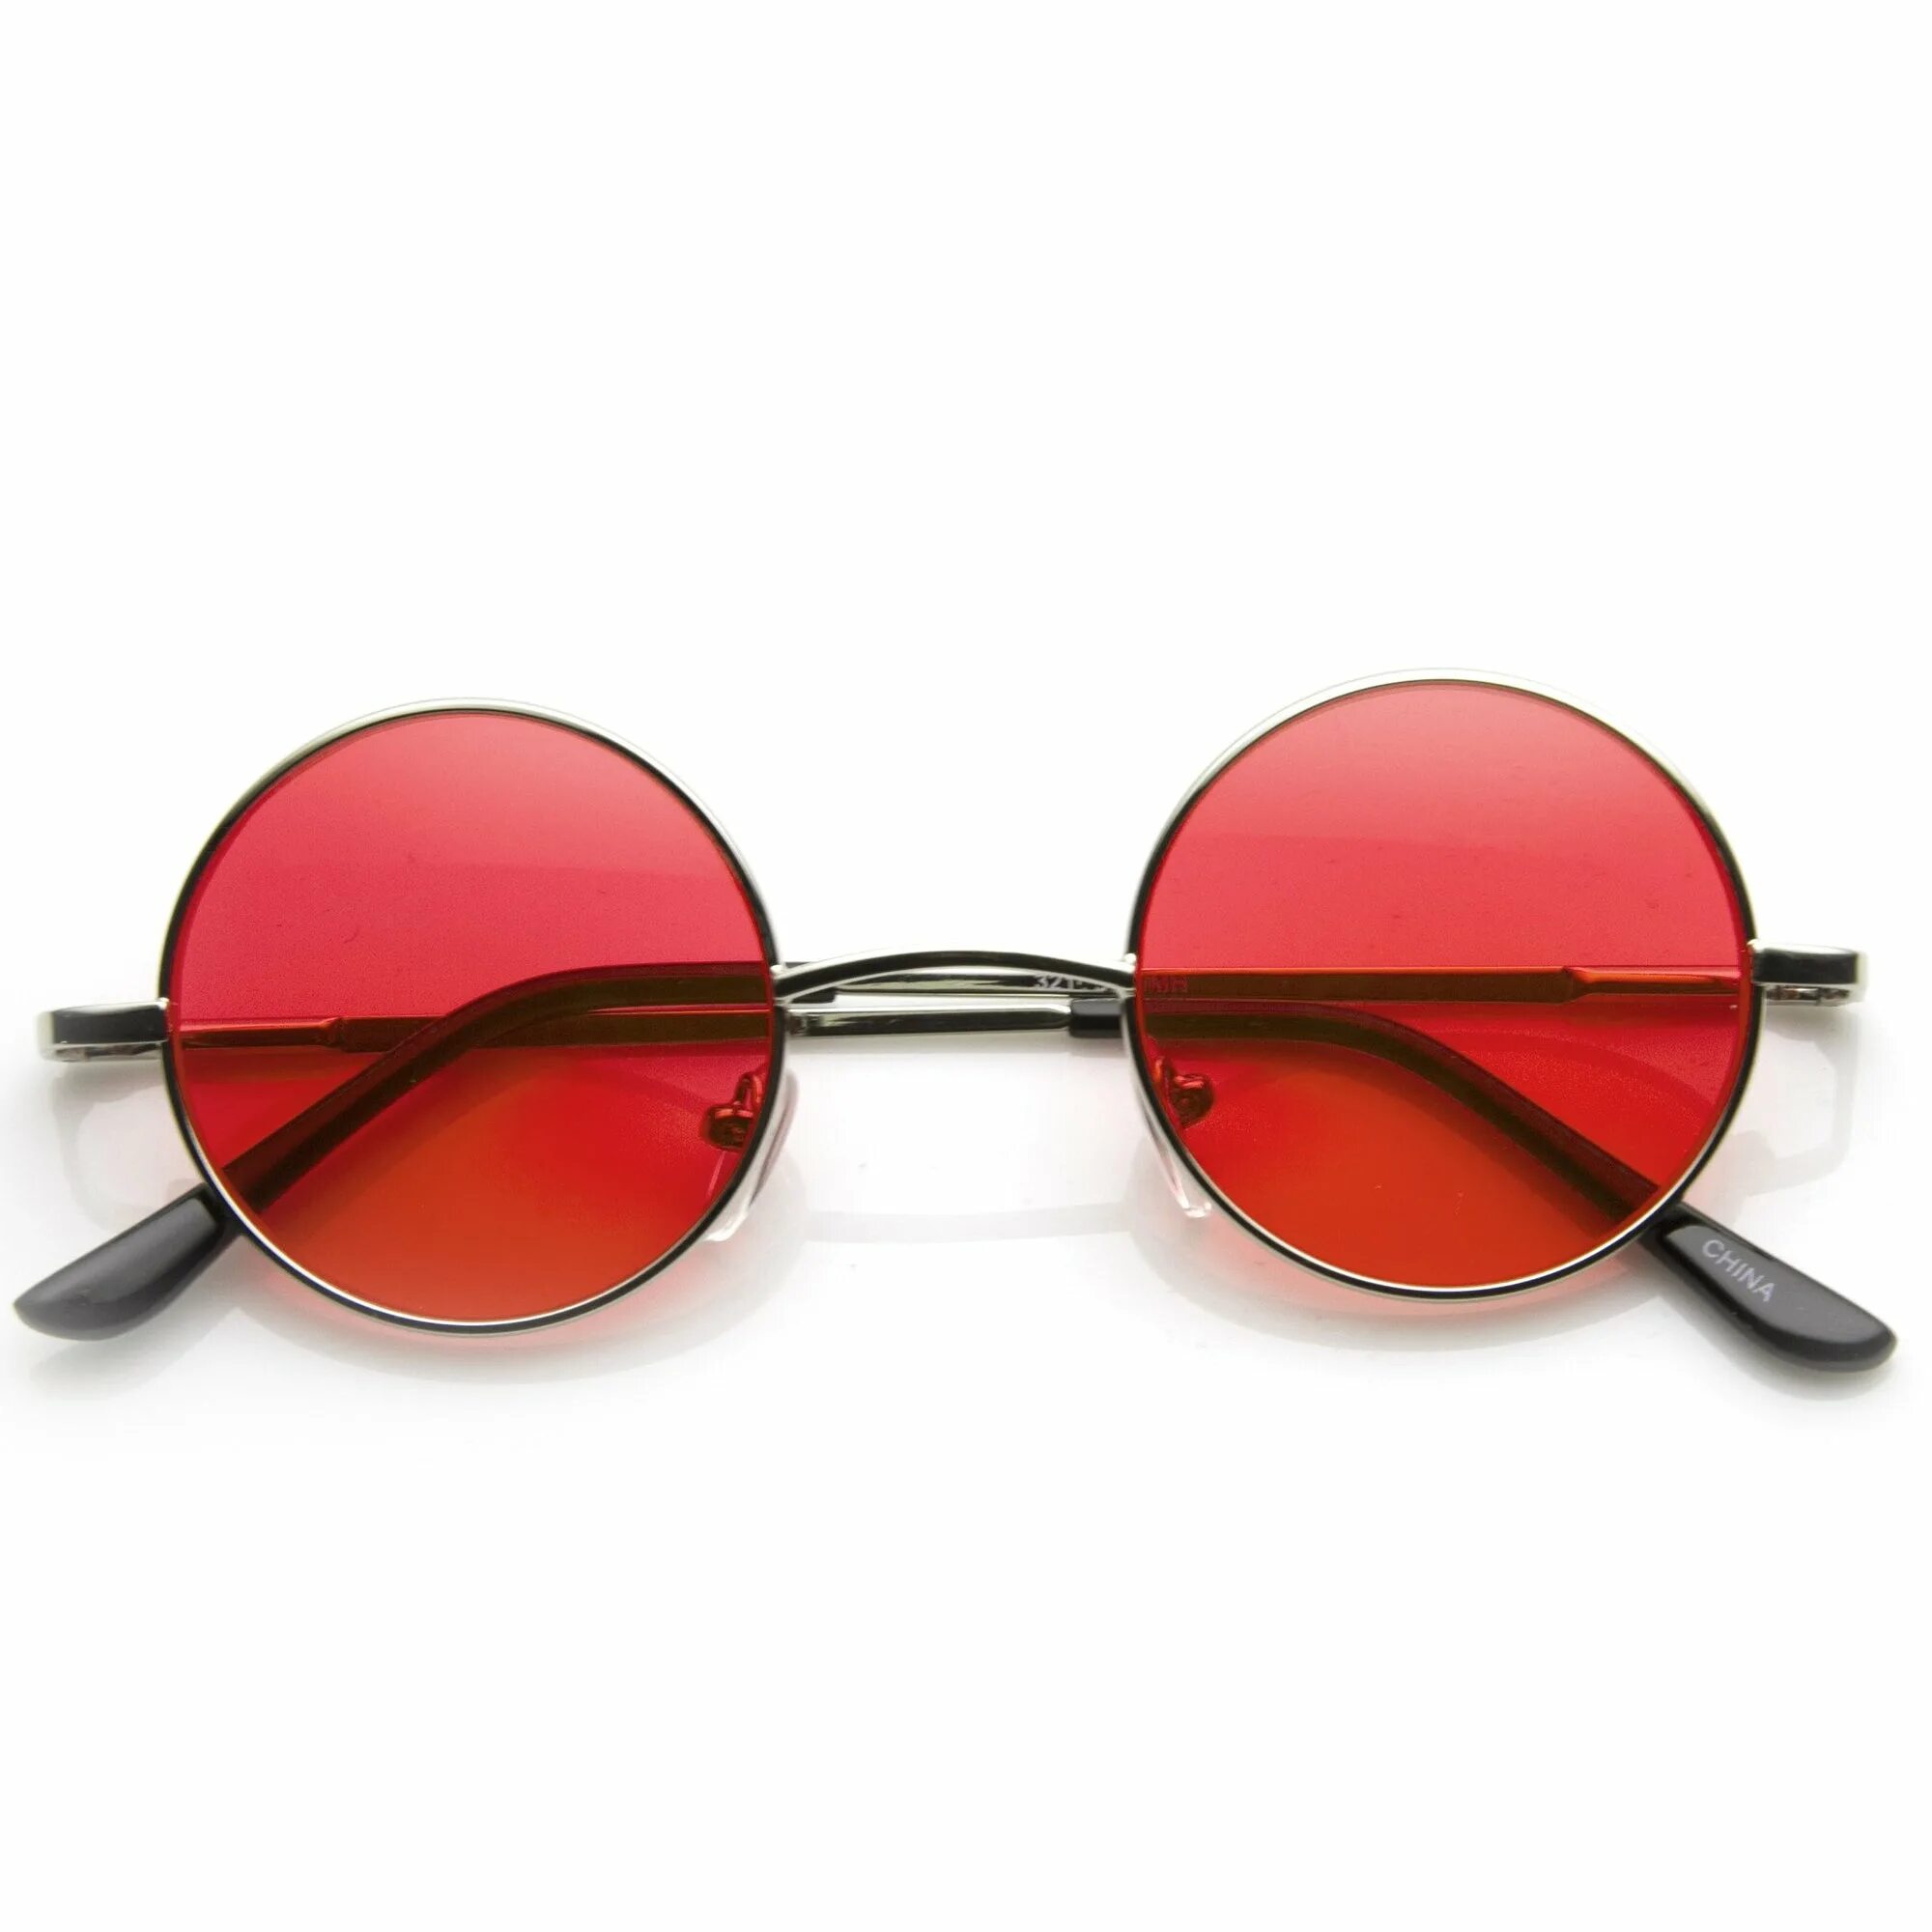 Очки Джона Леннона, красные. Очки Джона Леннона солнцезащитные. Джон Леннон солнечные очки. Red Sun очки солнцезащитные r6091. Мужские красные очки солнцезащитные